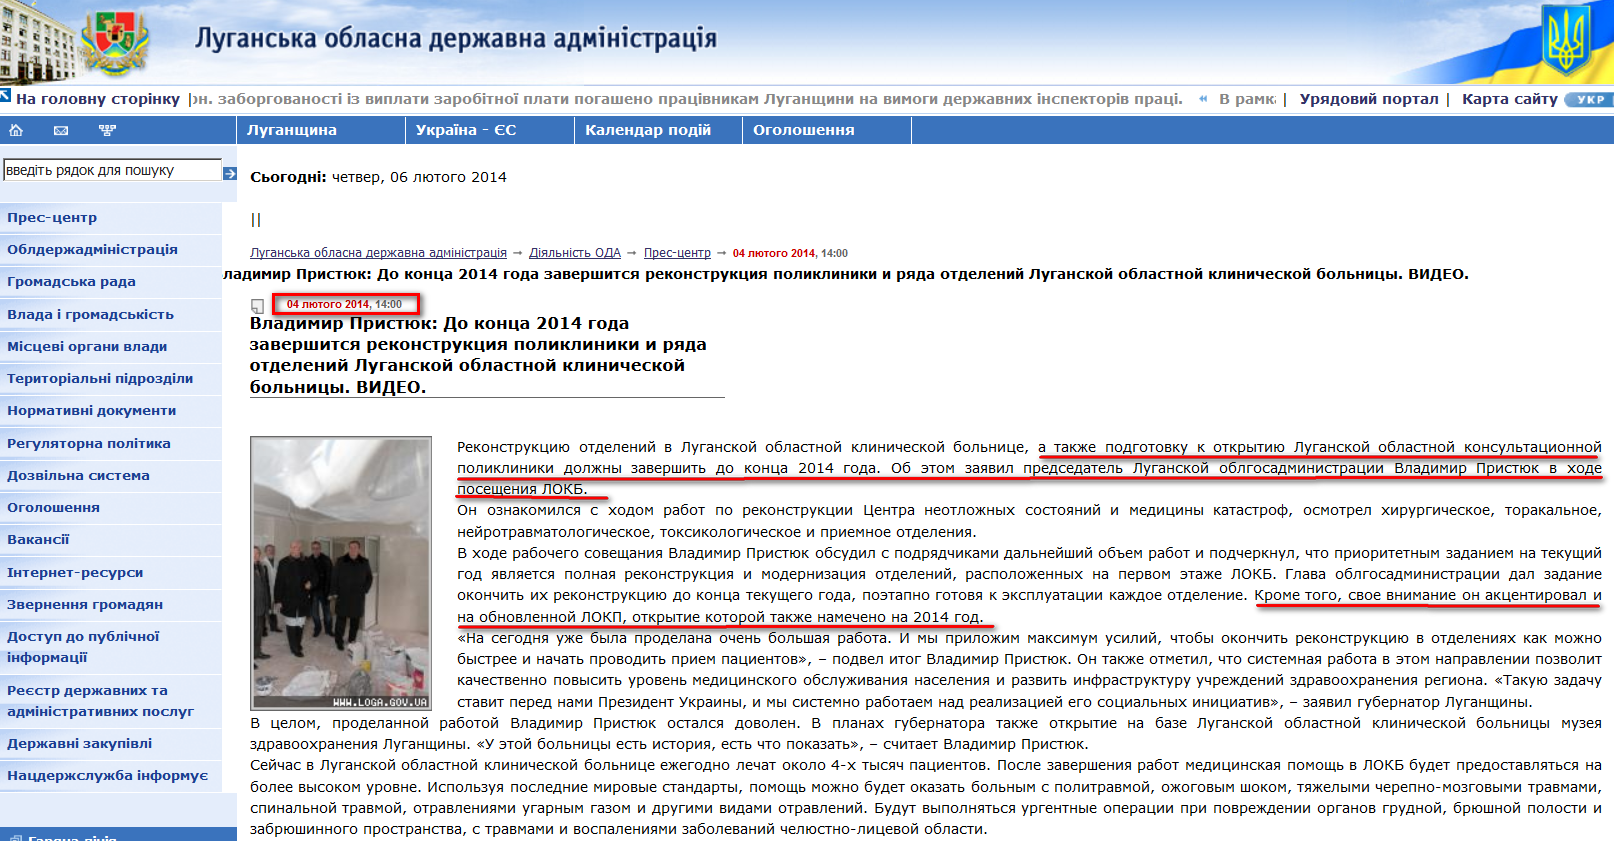 http://www.loga.gov.ua/oda/press/news/2014/02/04/news_63896.html